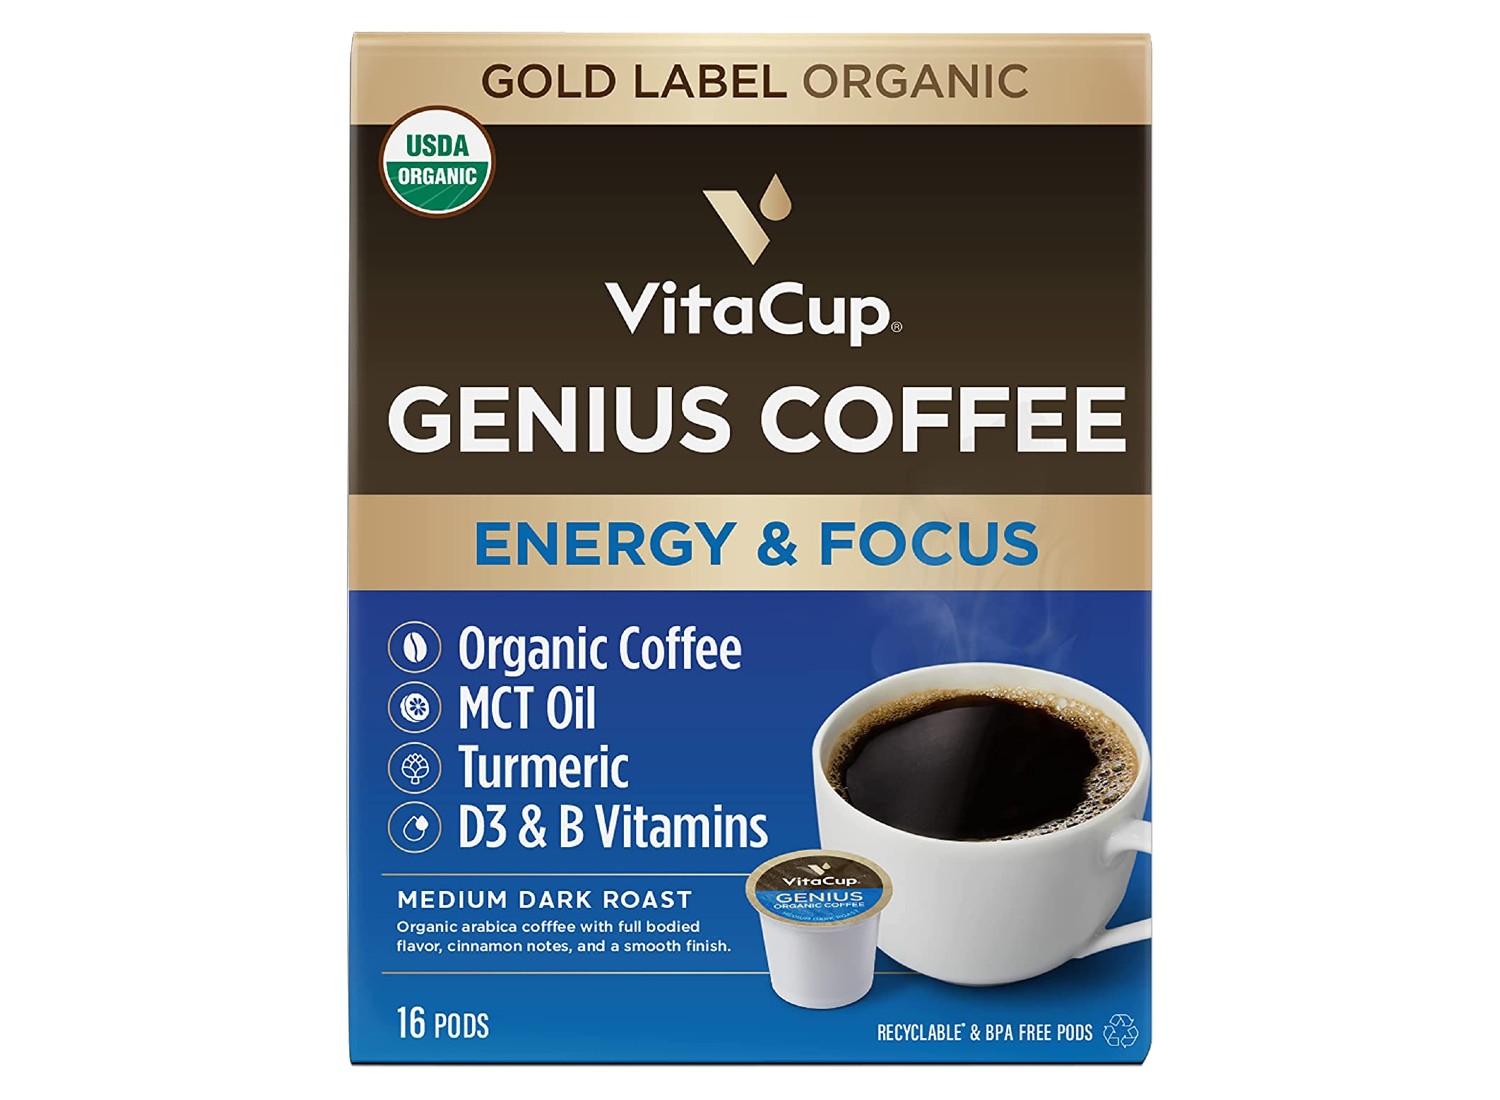 The VitaCup Genius Keto Coffee Pods sold on Amazon